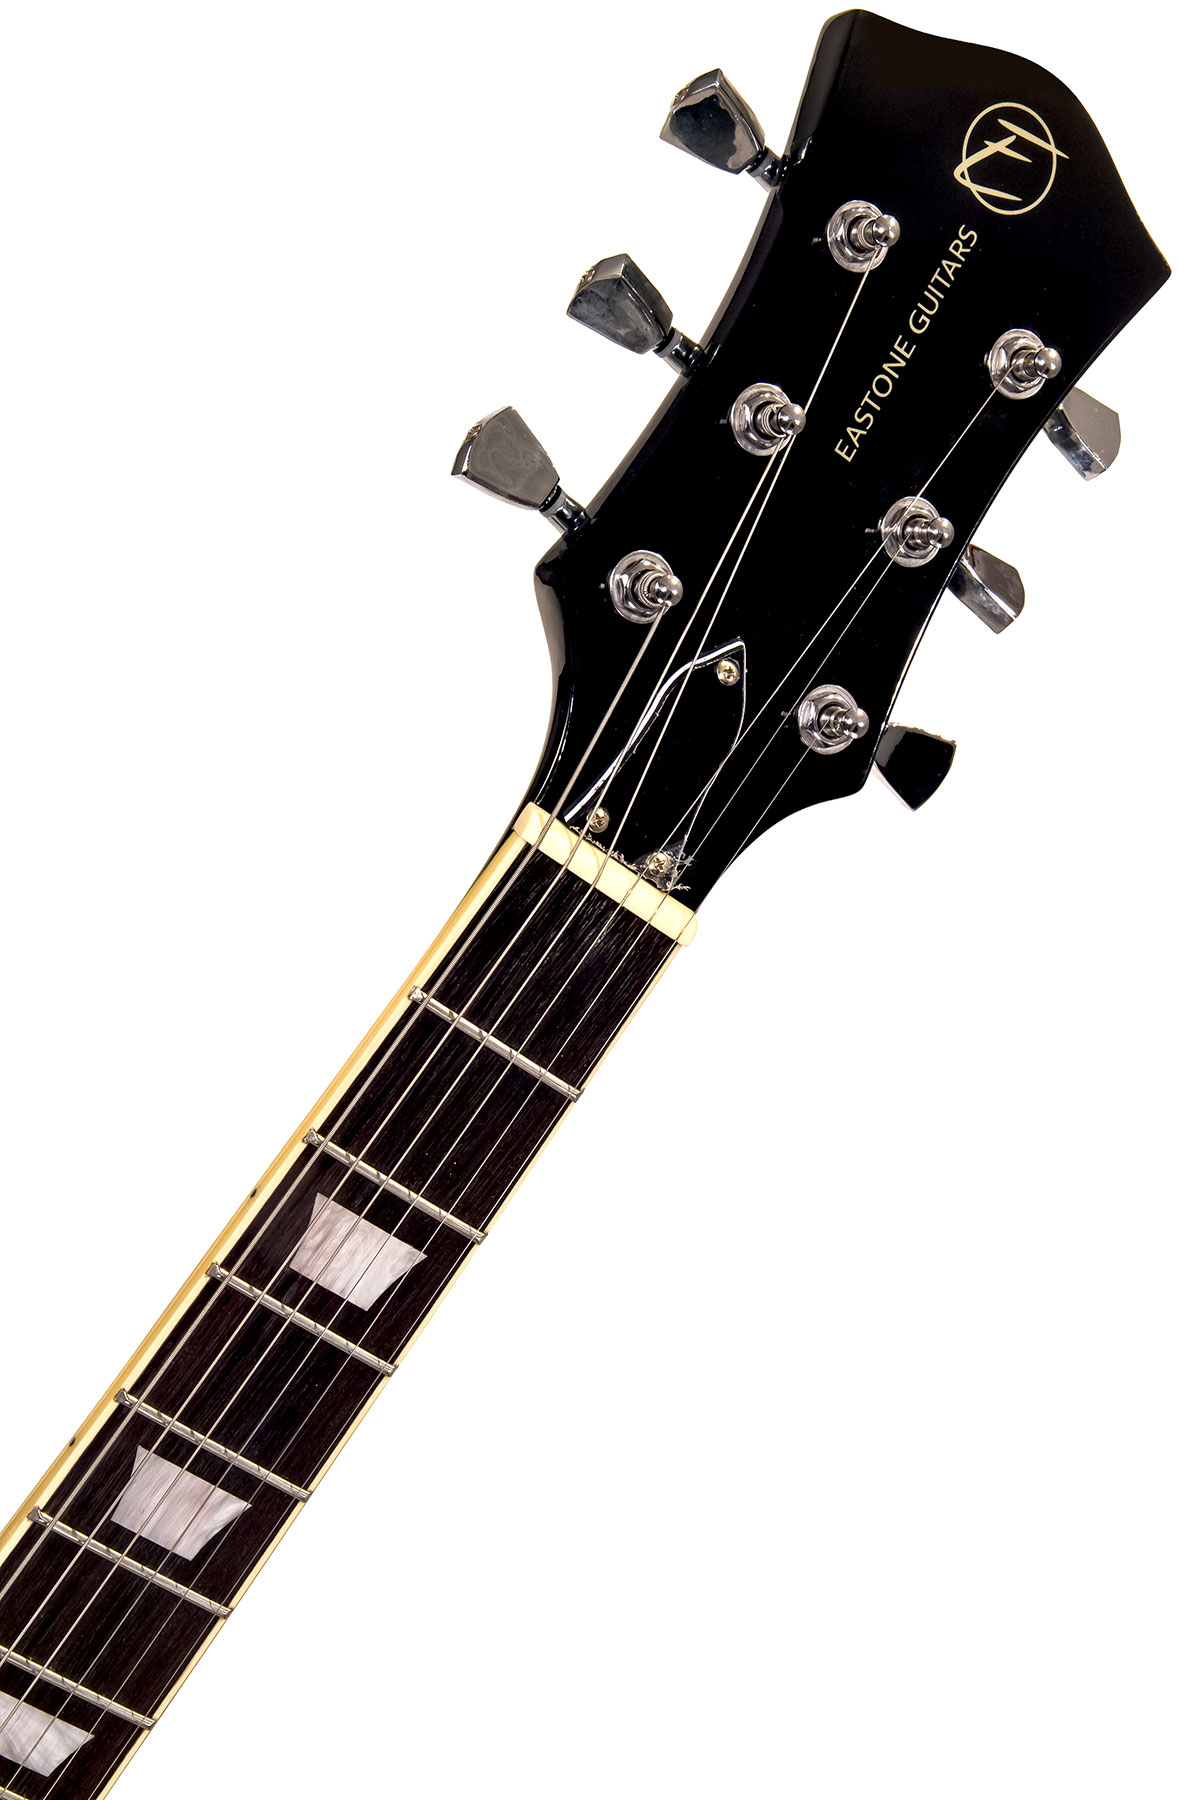 Eastone Sdc70 Hh Ht Pur - Black - Retro rock electric guitar - Variation 4